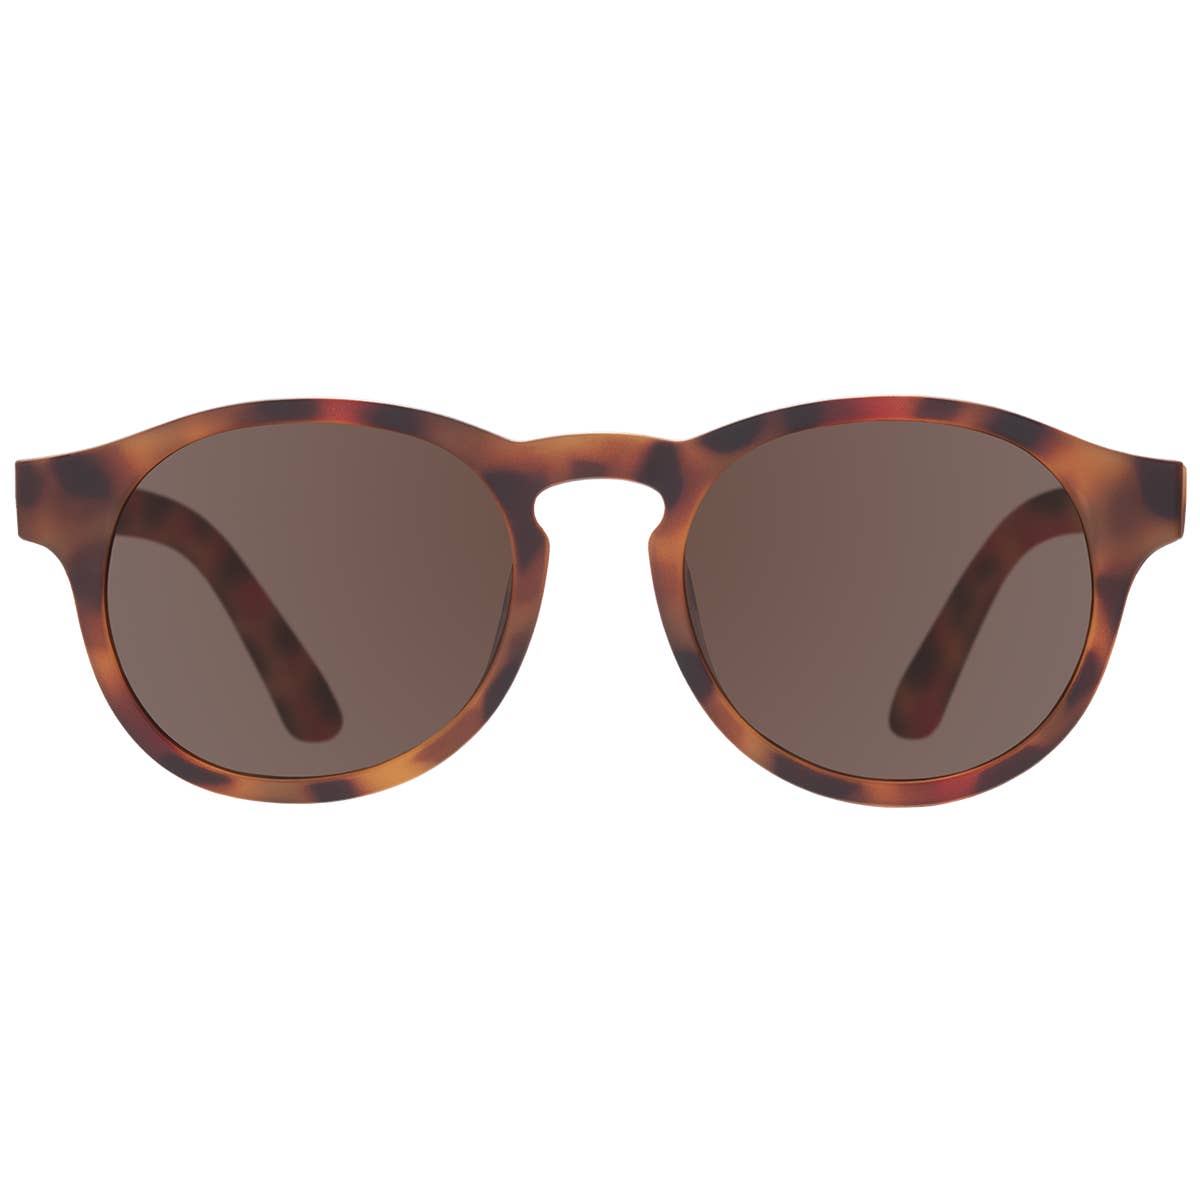 Keyhole Sunglasses | Tortoise Shell Limited Edition